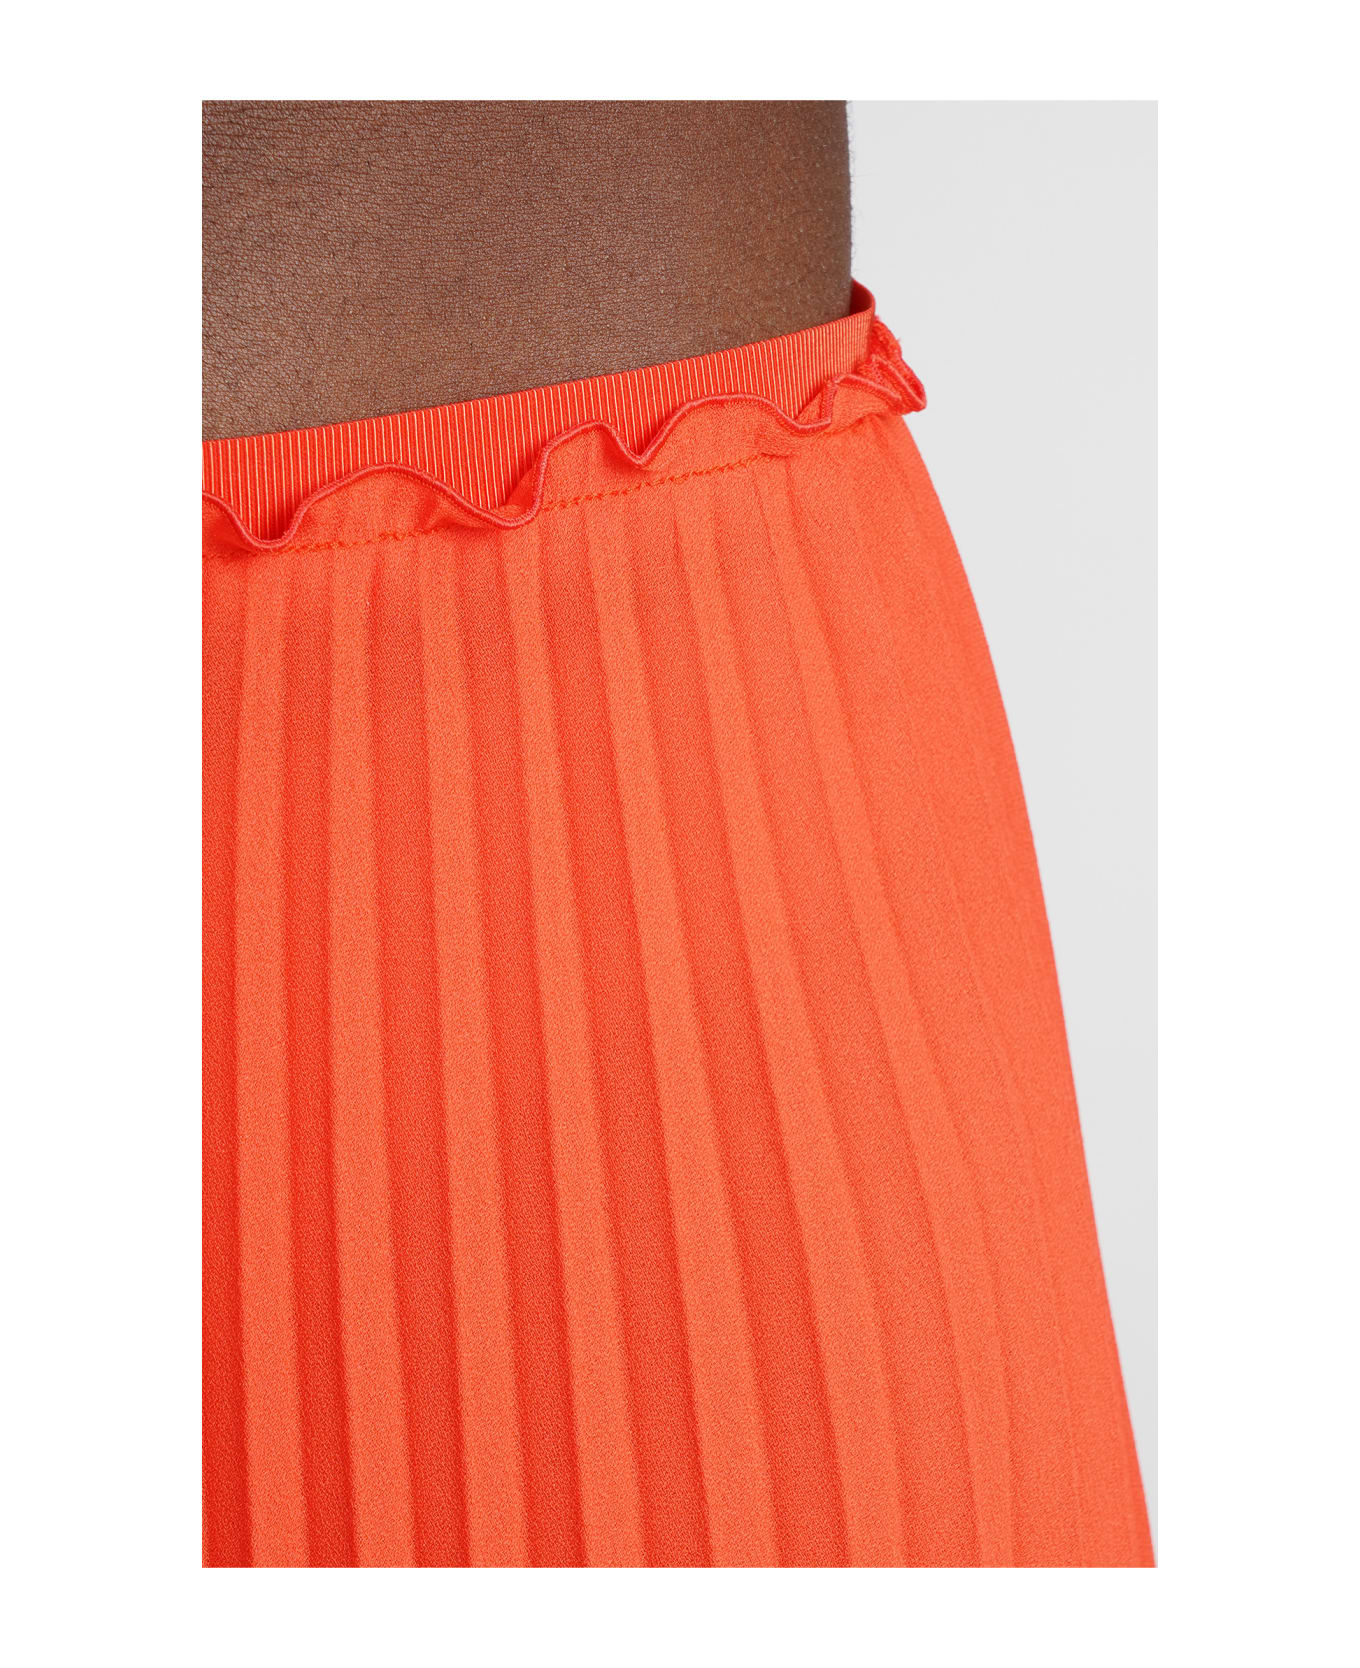 RED Valentino Skirt In Orange Synthetic Fibers - orange